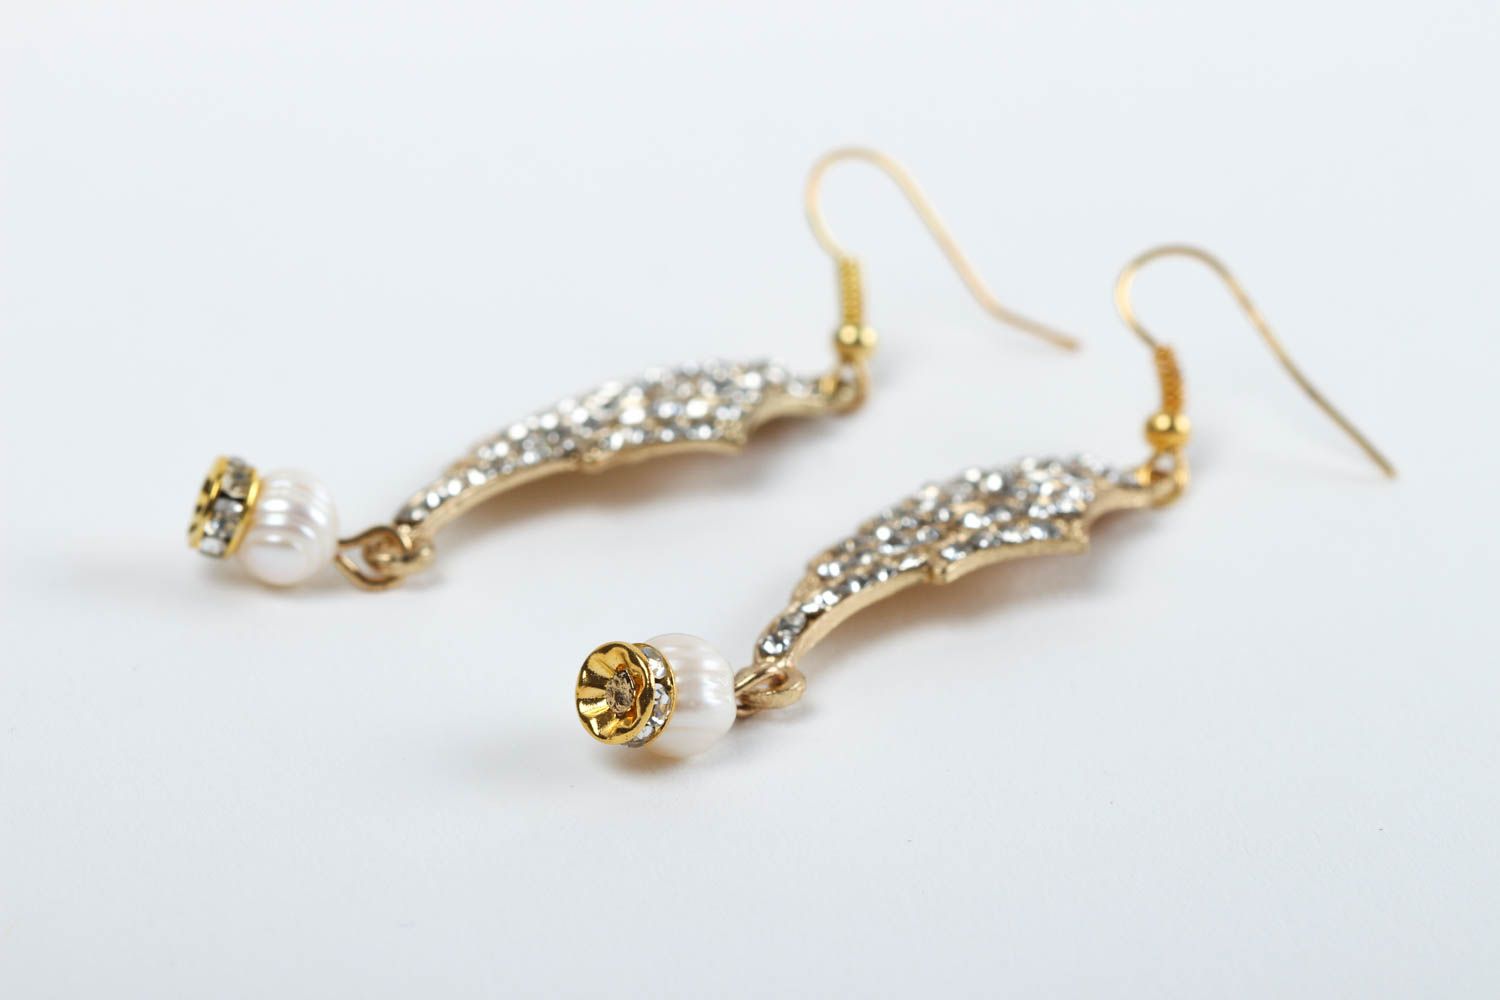 Handmade earrings designer earrings unusual gift elite jewelry gift ideas photo 3